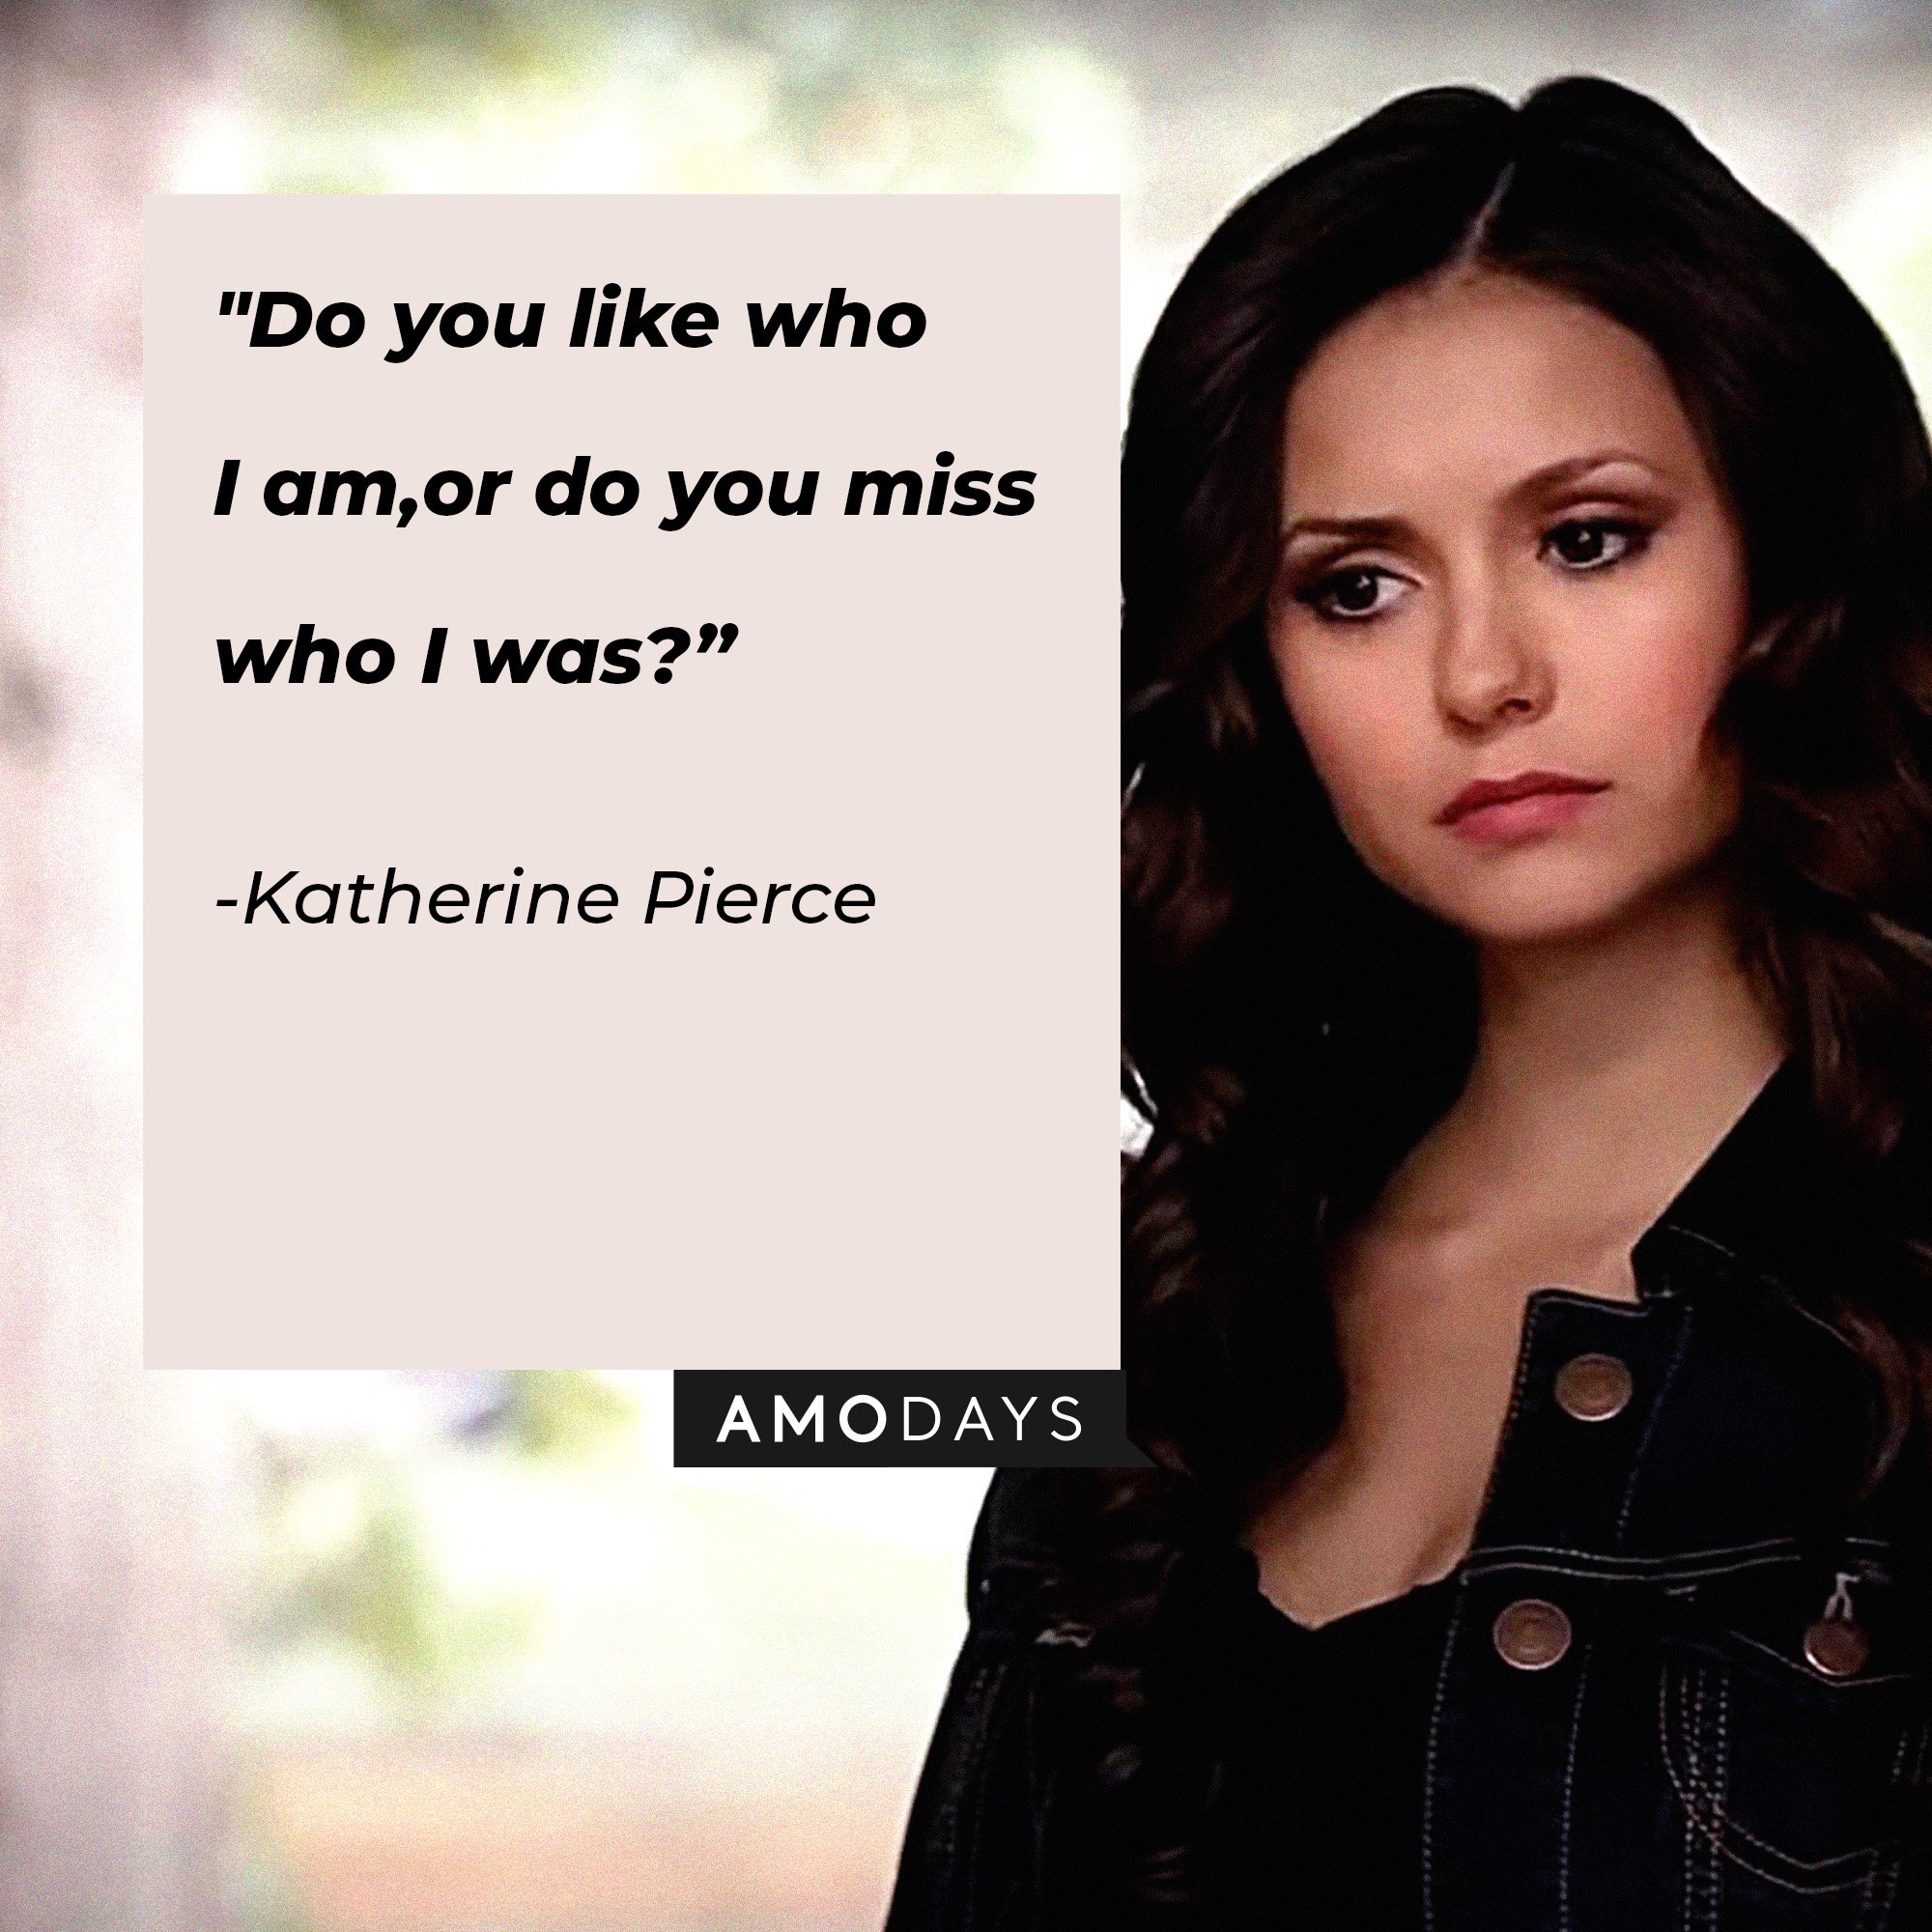 Katherine Pierce's quote: "Do you like who I am, or do you miss who I was?” | Image: AmoDays